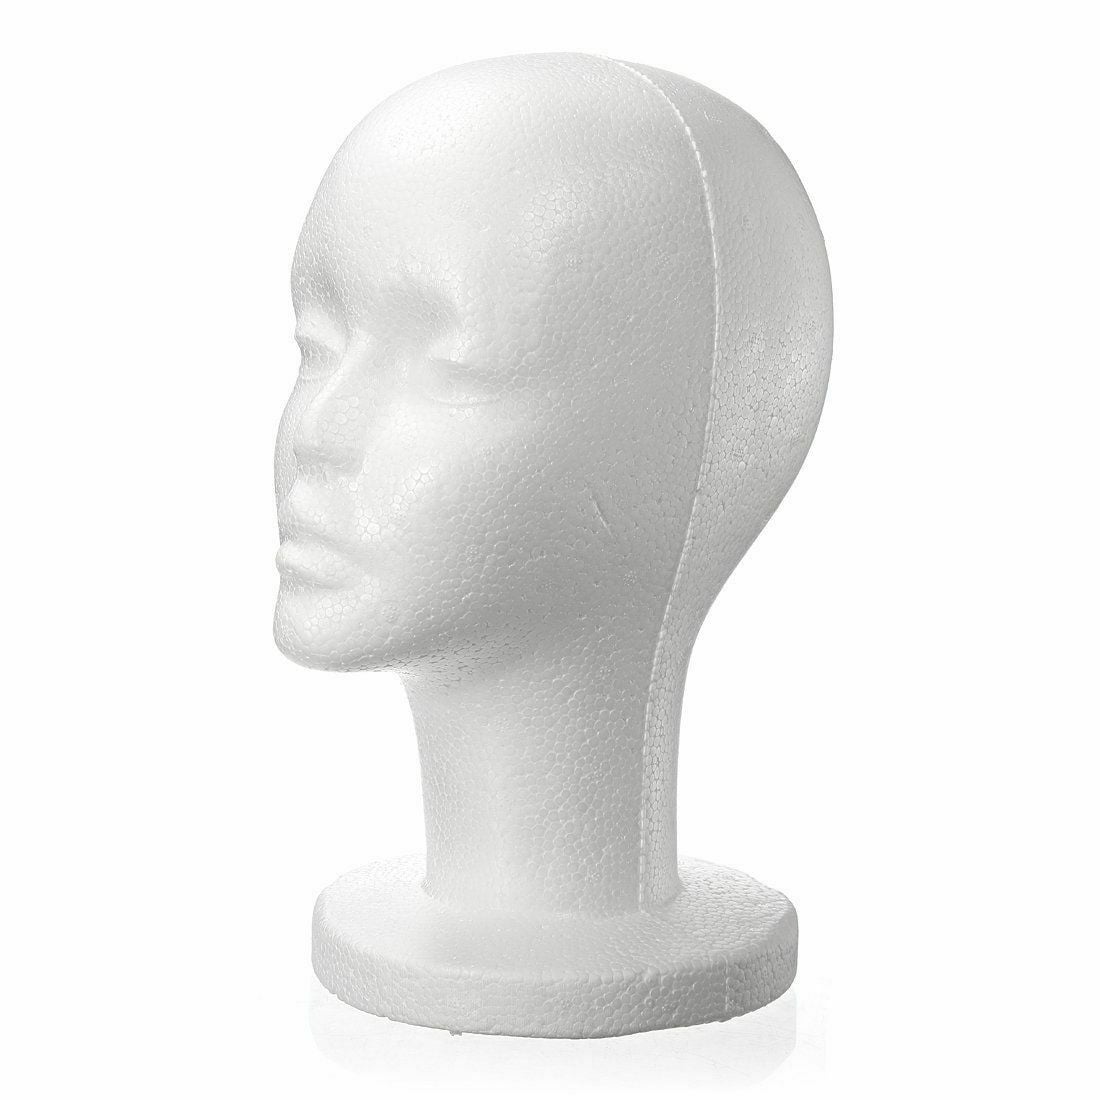 White Female Head Model Wig Hair Hat Glass Display Styrofoam Foam Mannequin New 